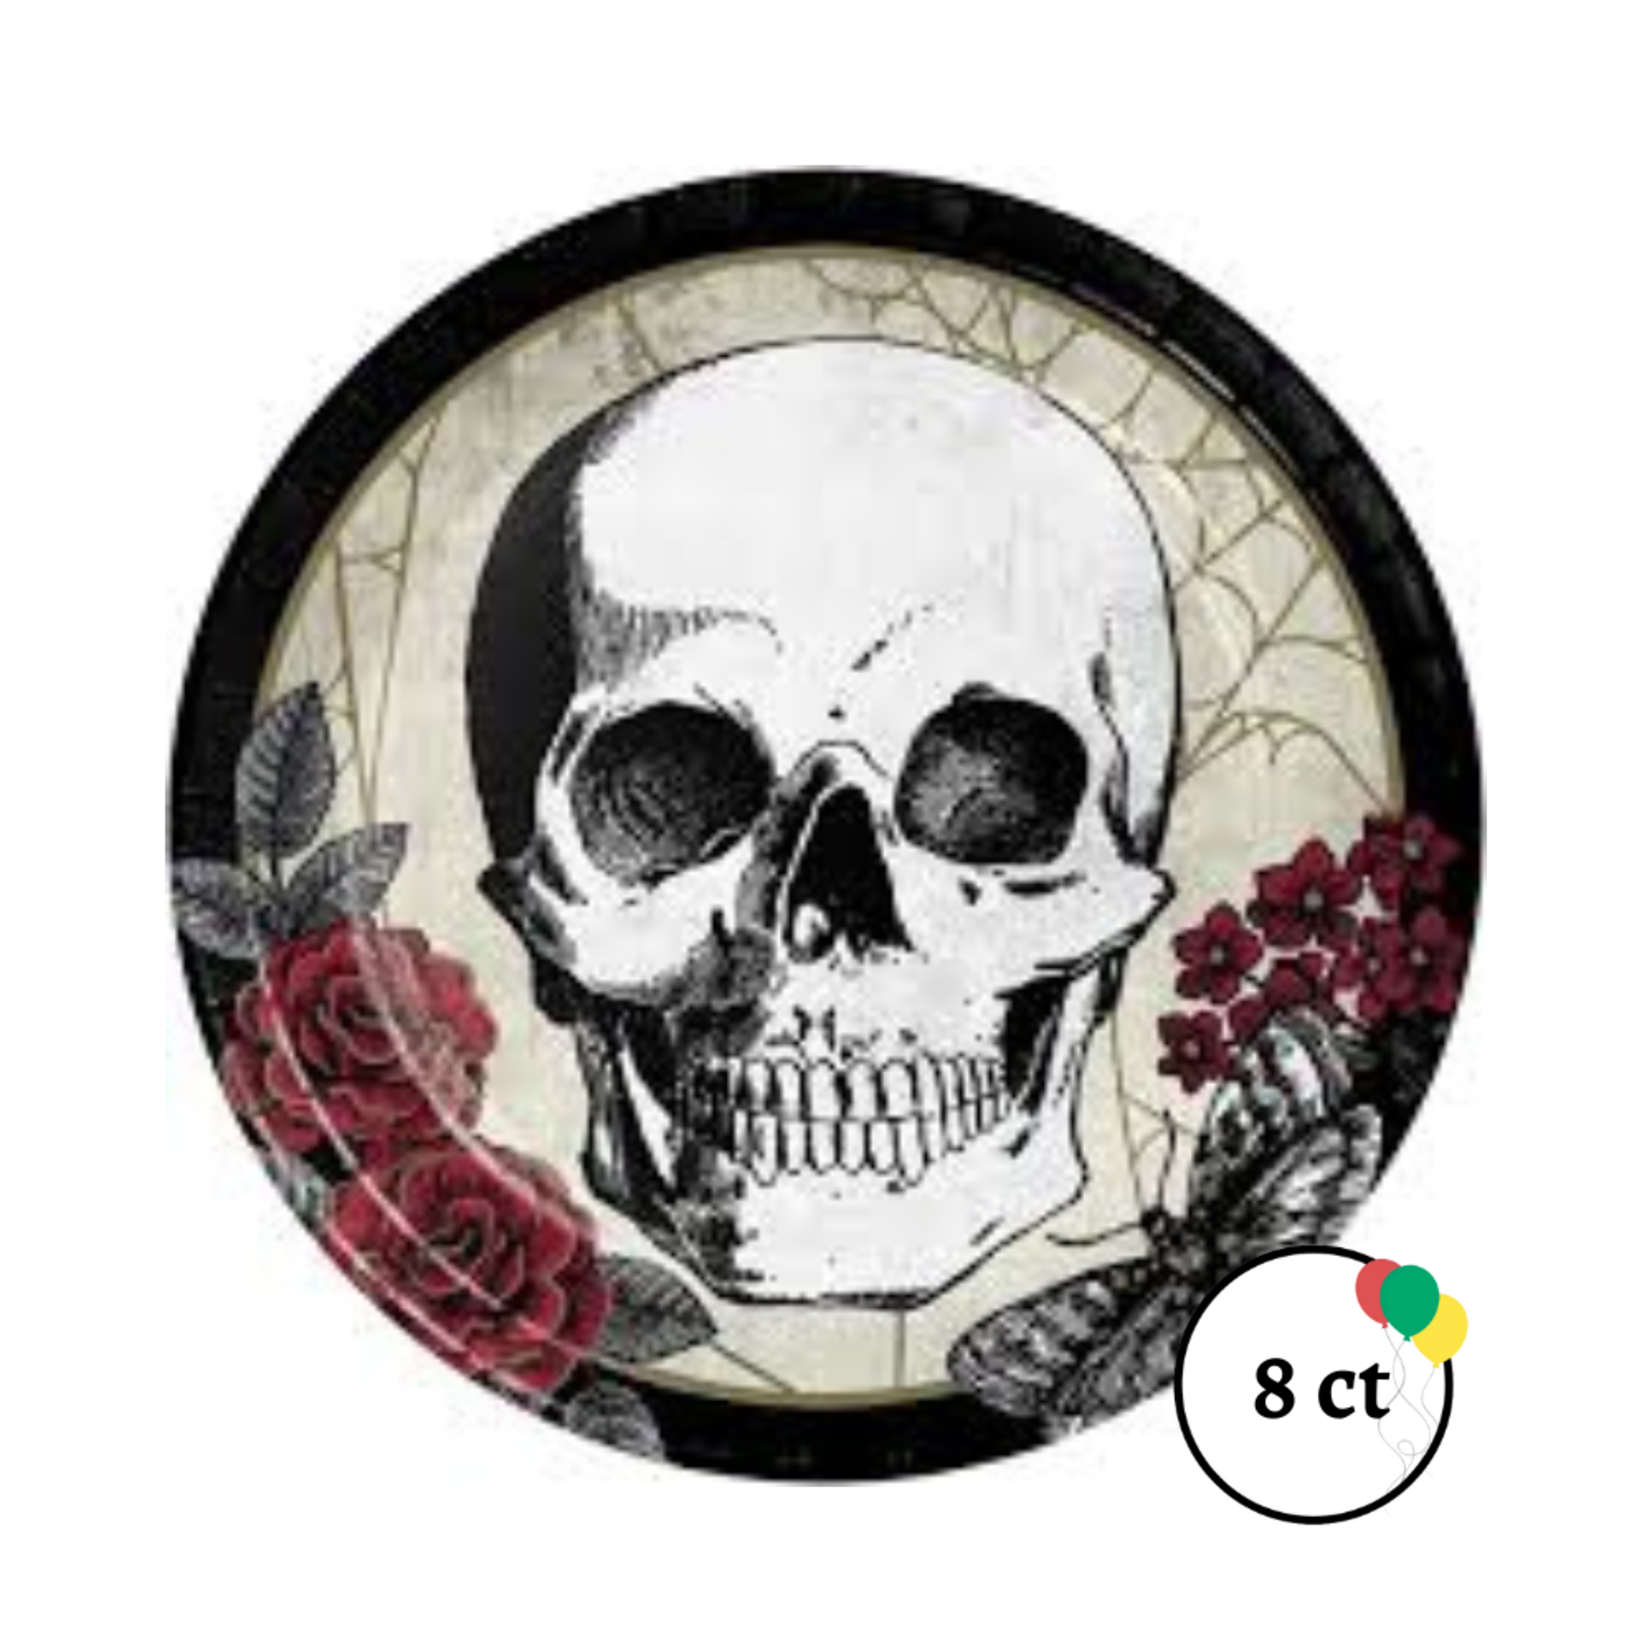 Skull and Roses Dinner Plate 8ct